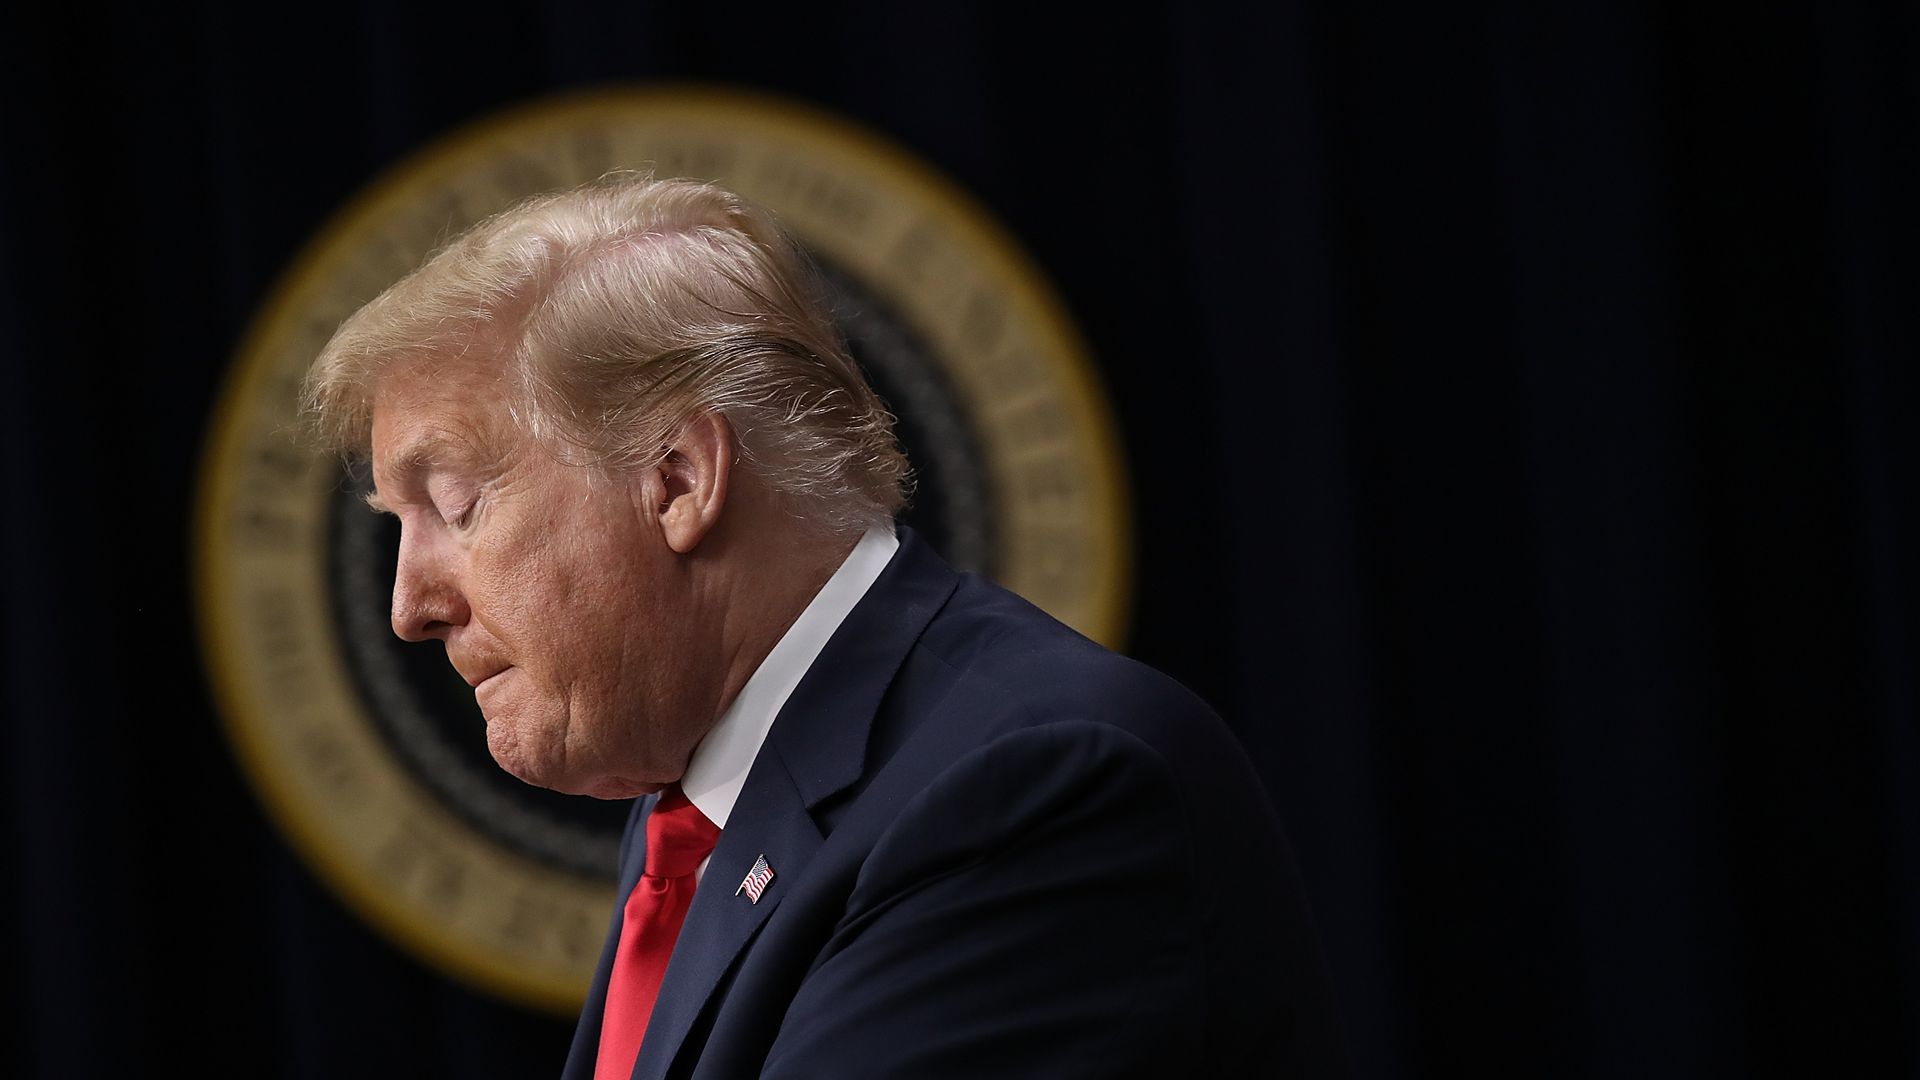 Donald Trump looks down bites his lip before a dark background.